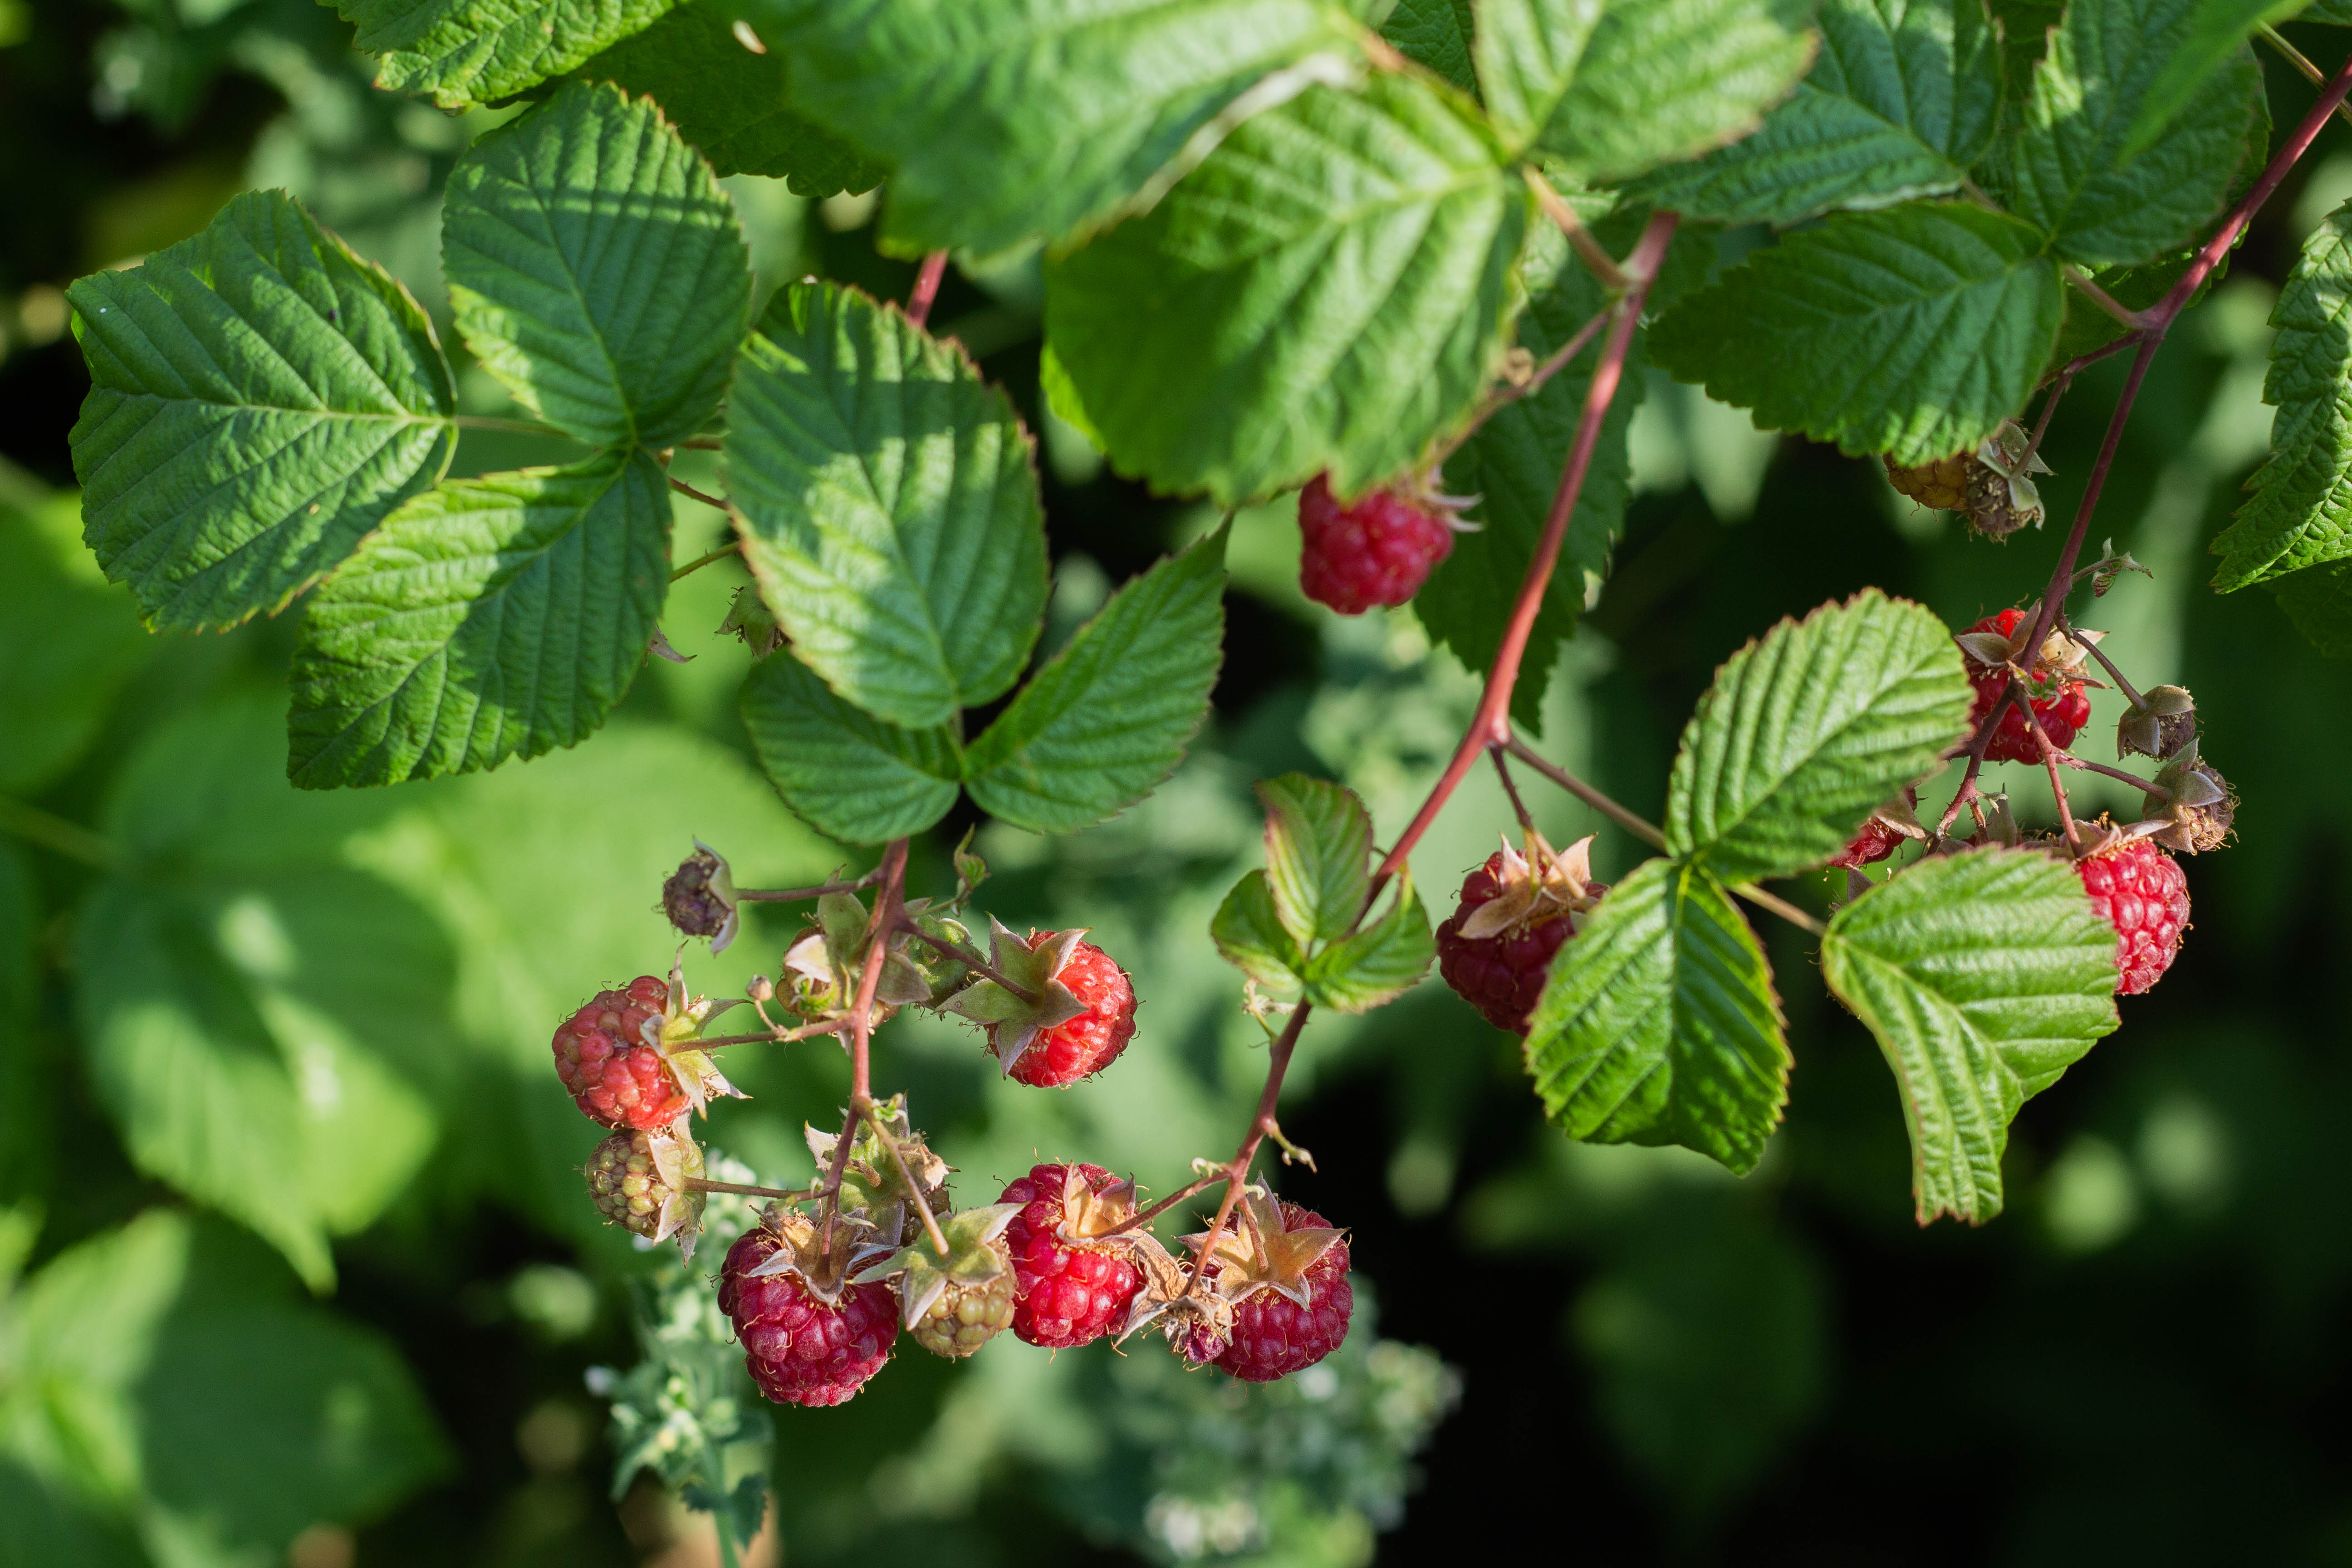 A raspberry bush with raspberries